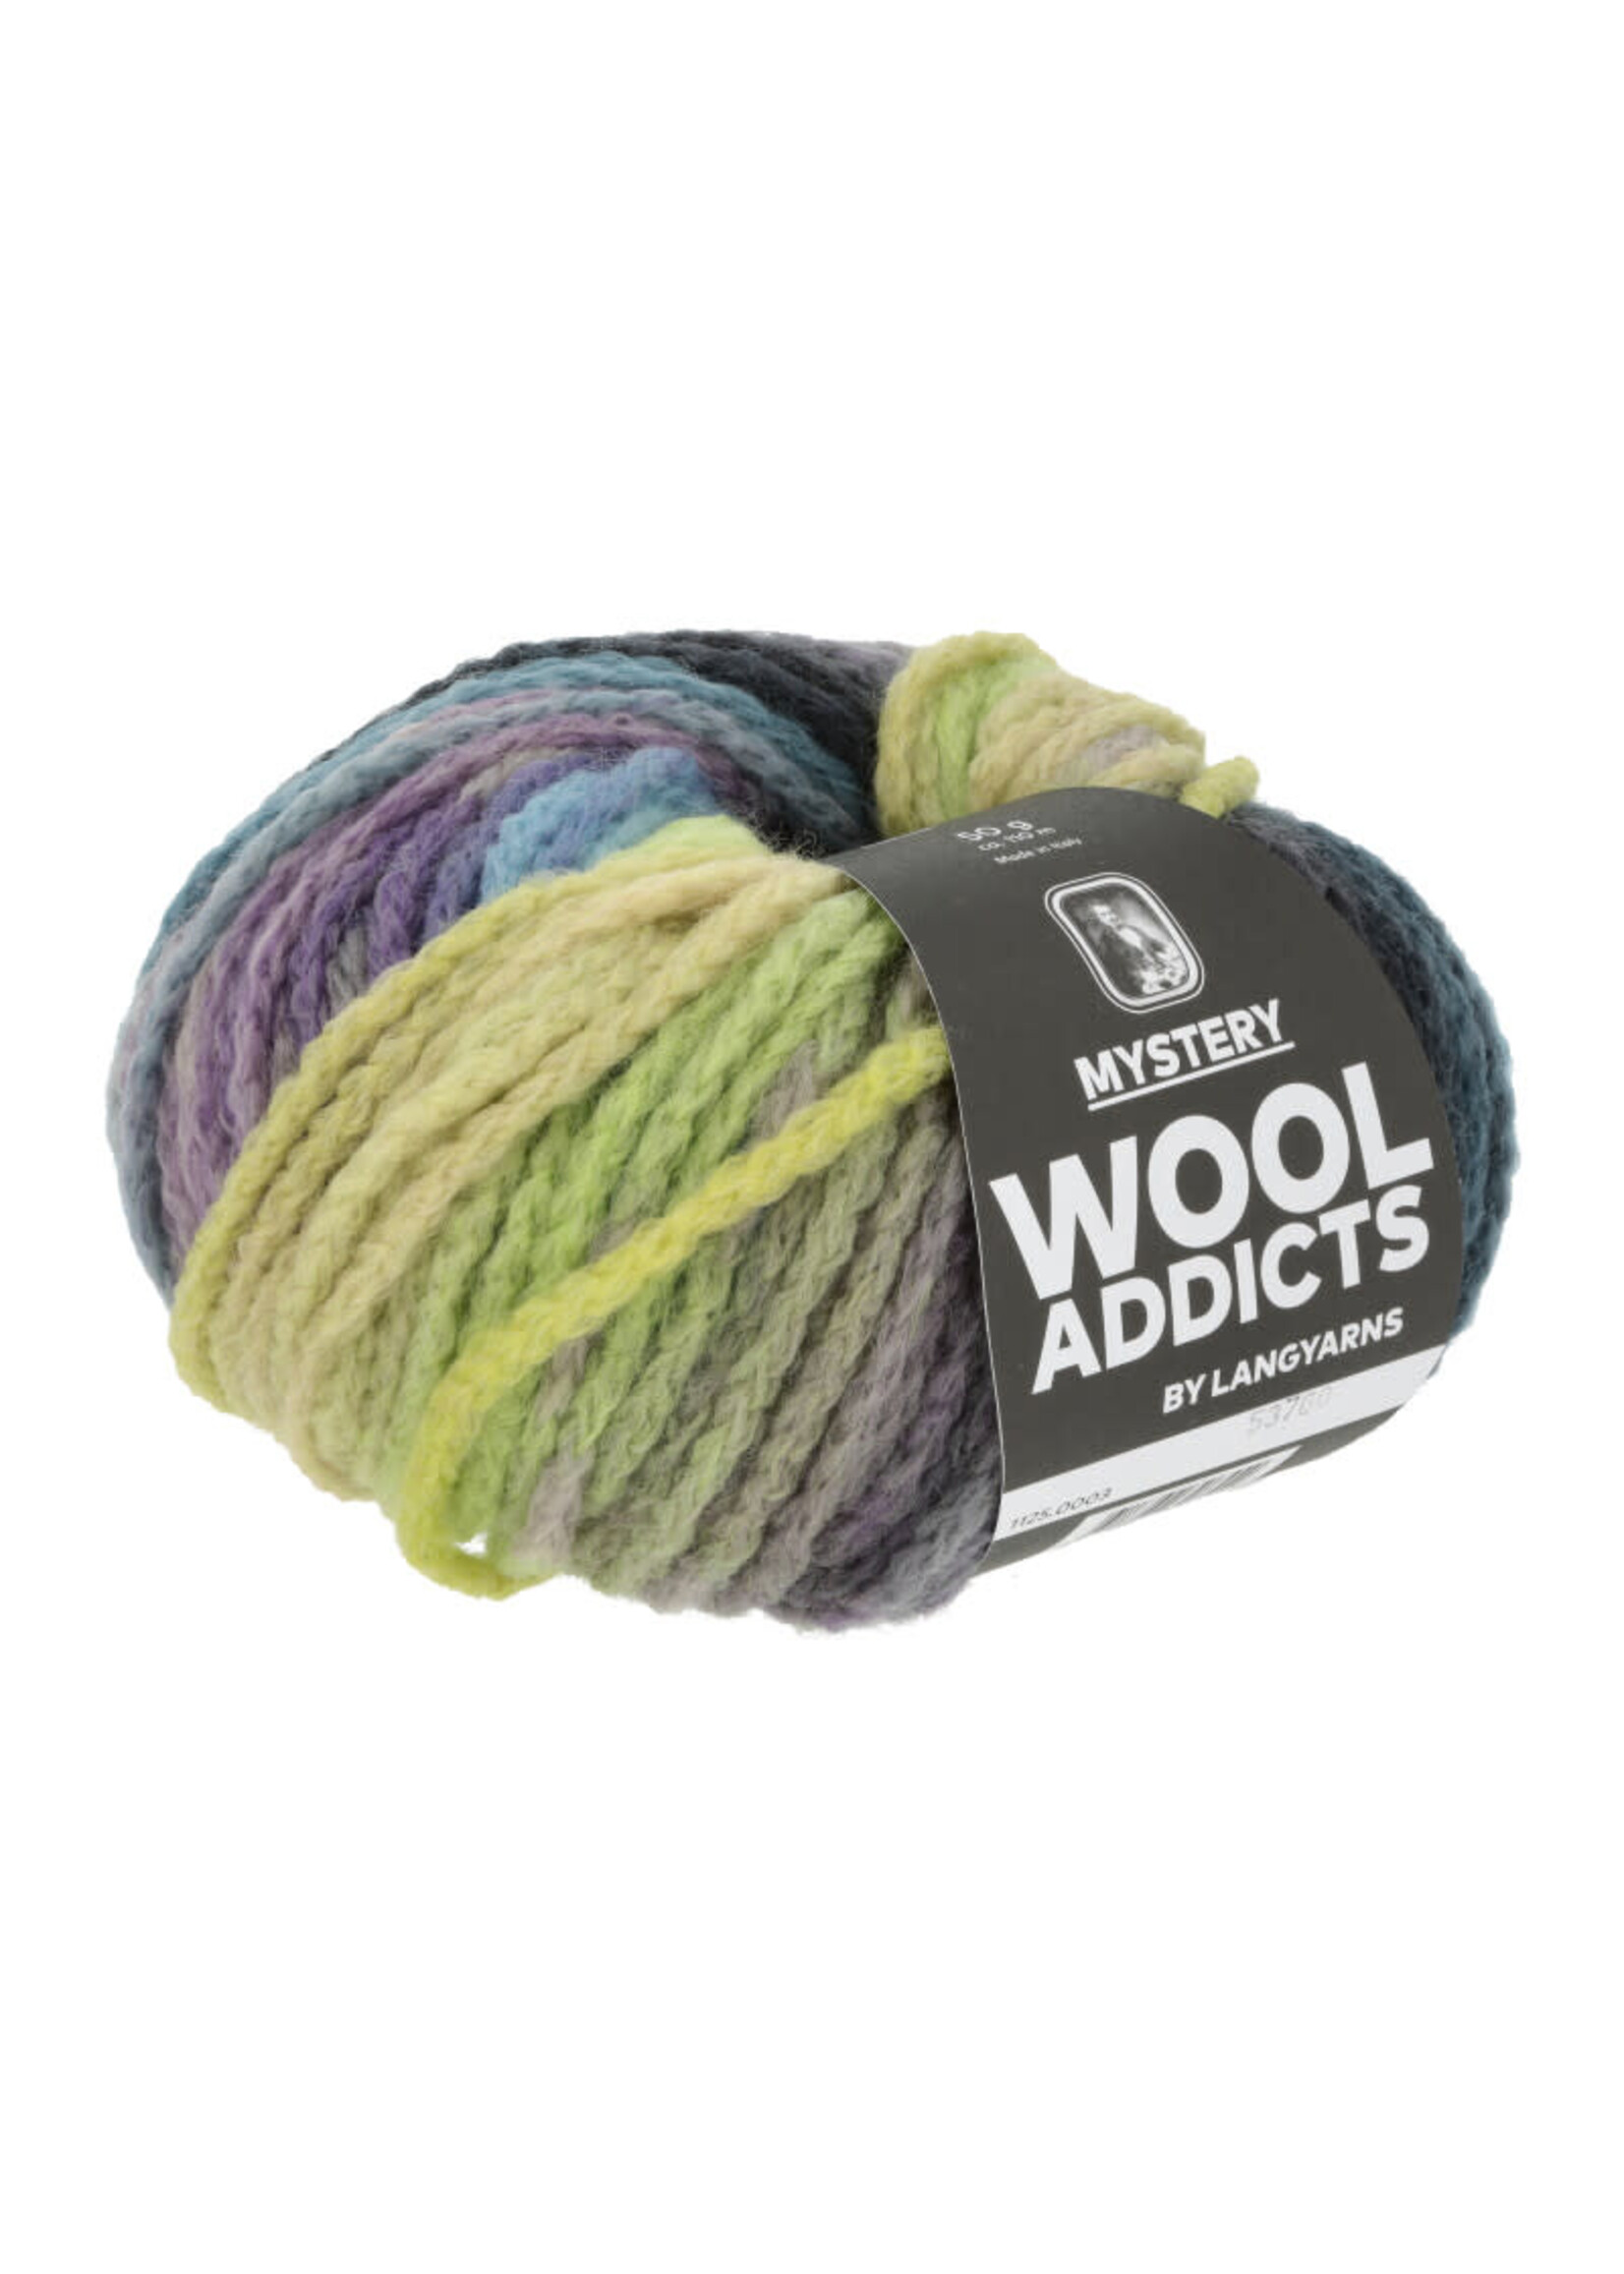 WoolAddicts Mystery - 0003